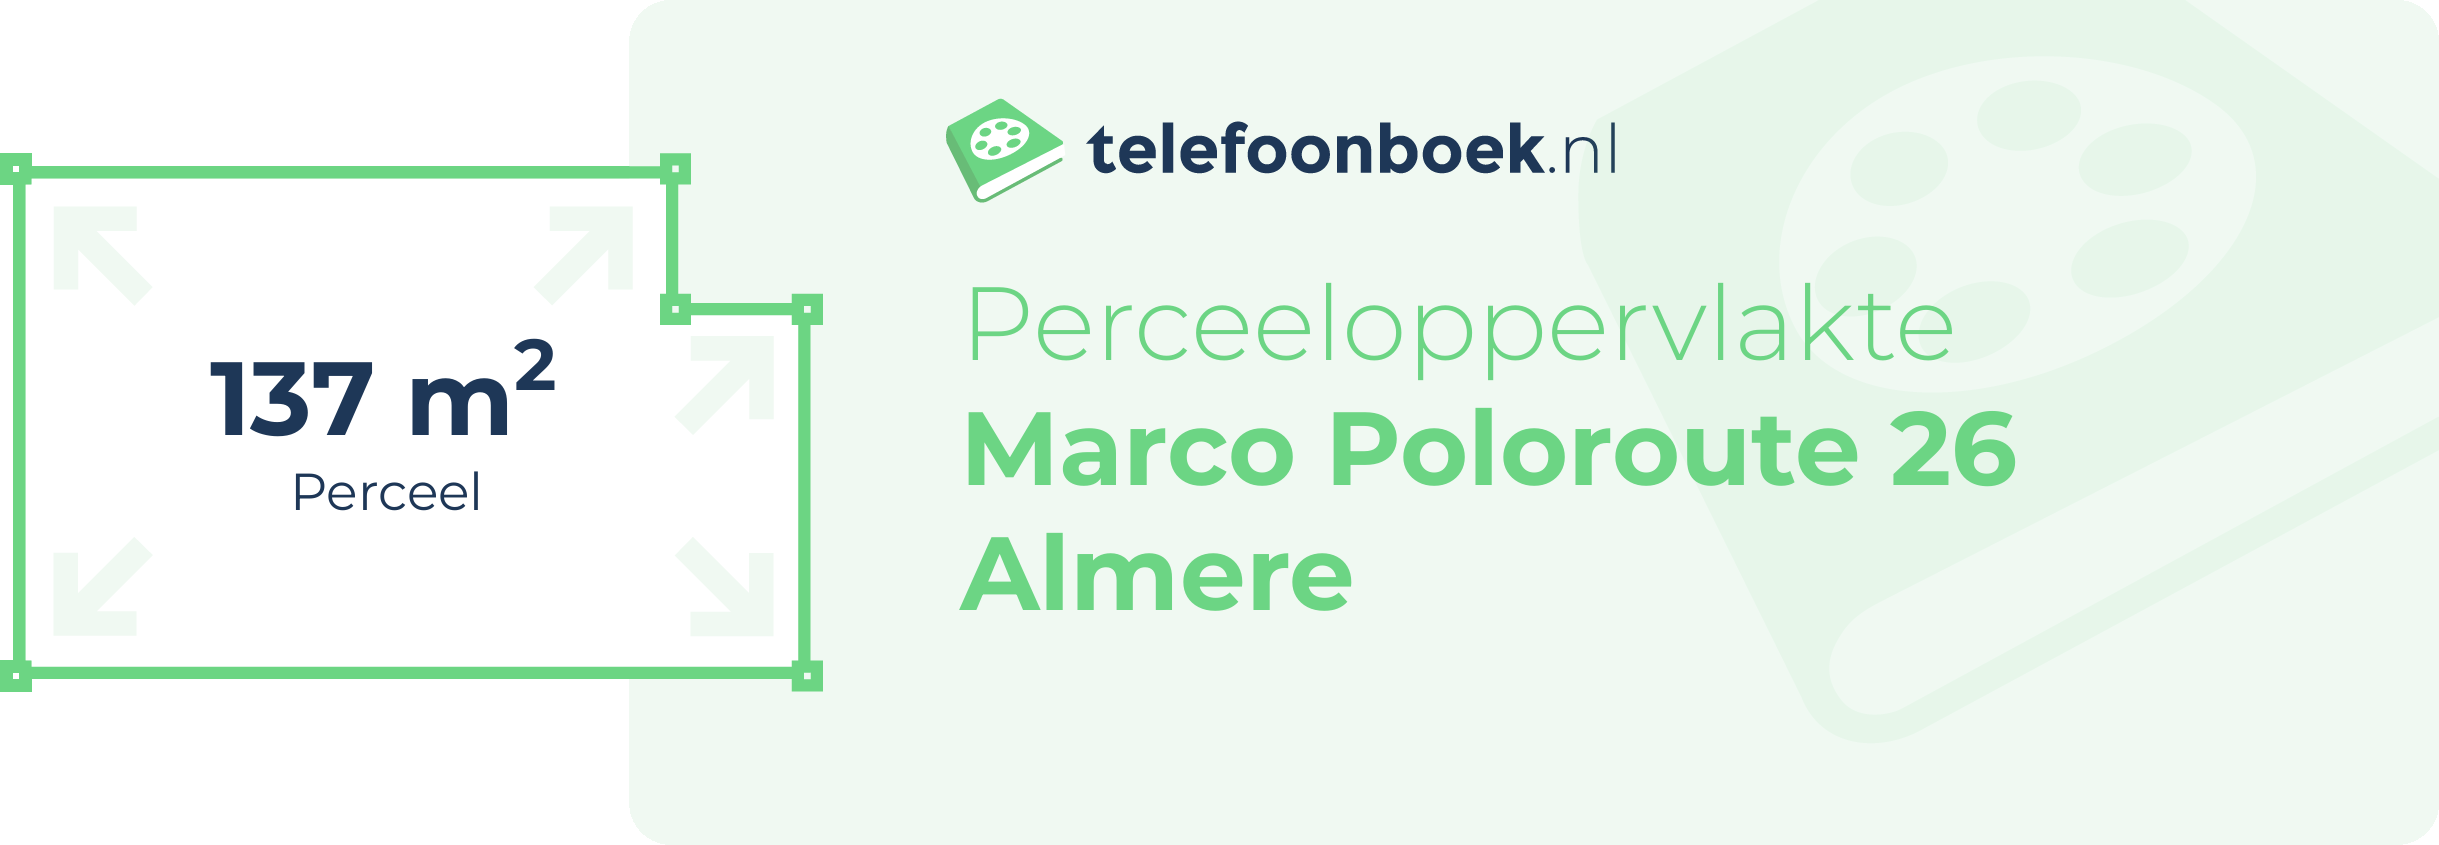 Perceeloppervlakte Marco Poloroute 26 Almere